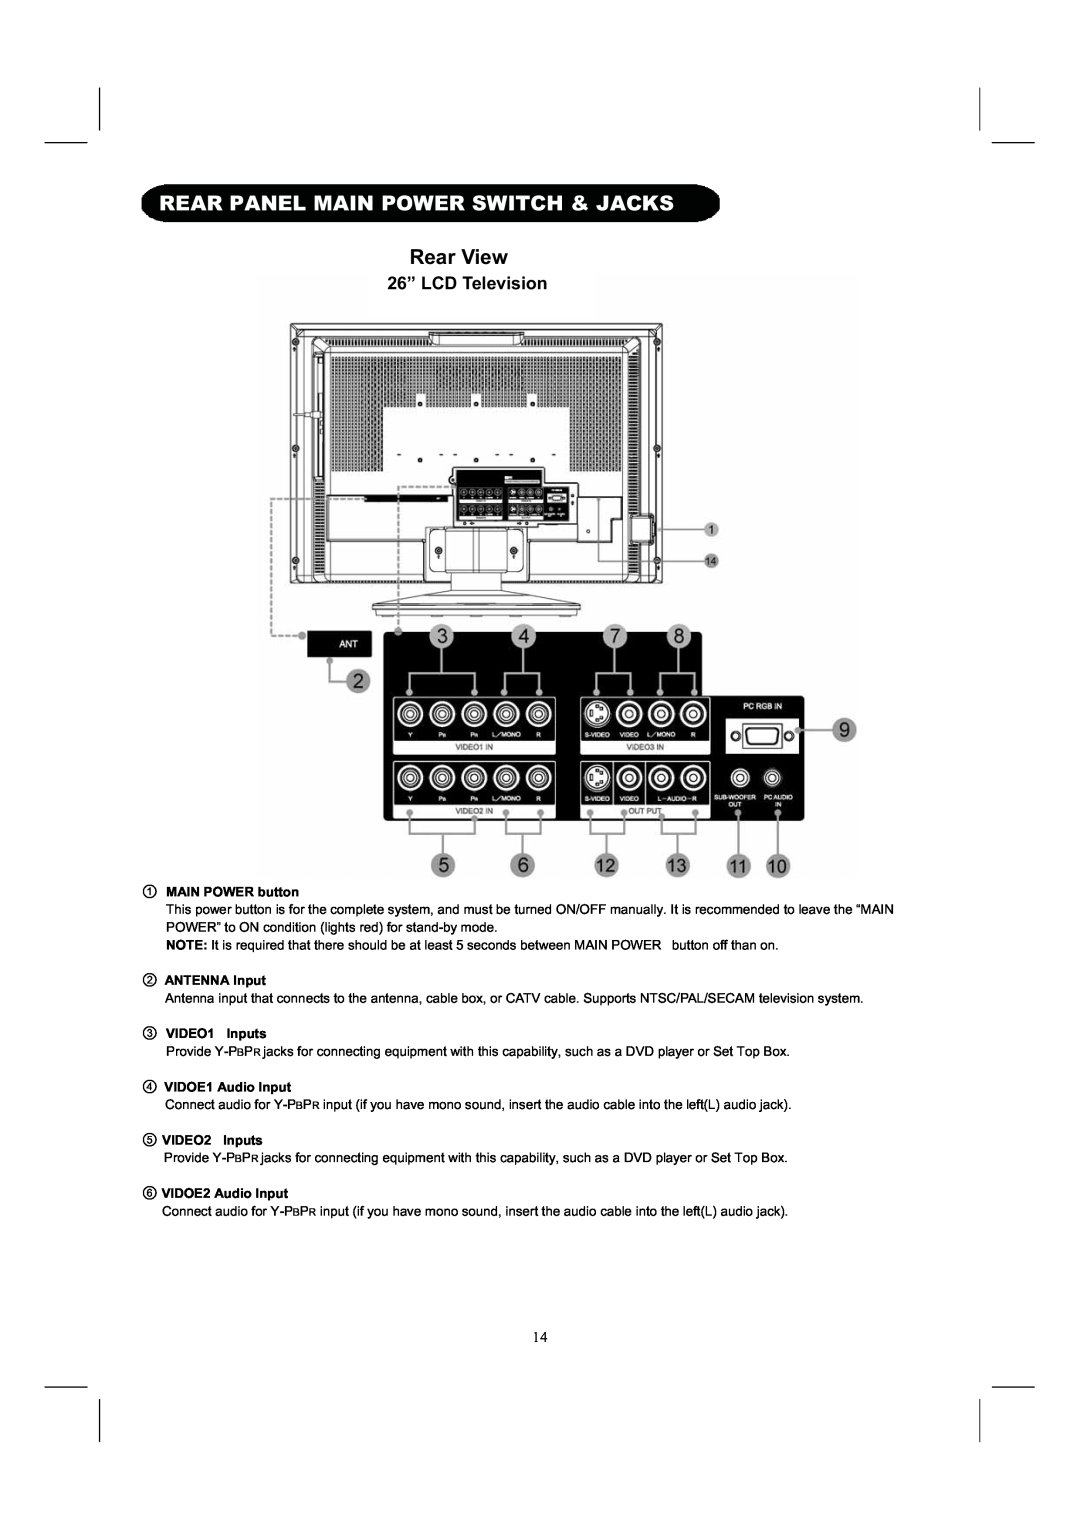 Hitachi 26LD8000TA user manual Rear Panel Main Power Switch & Jacks, 26” LCD Television, Rear View 